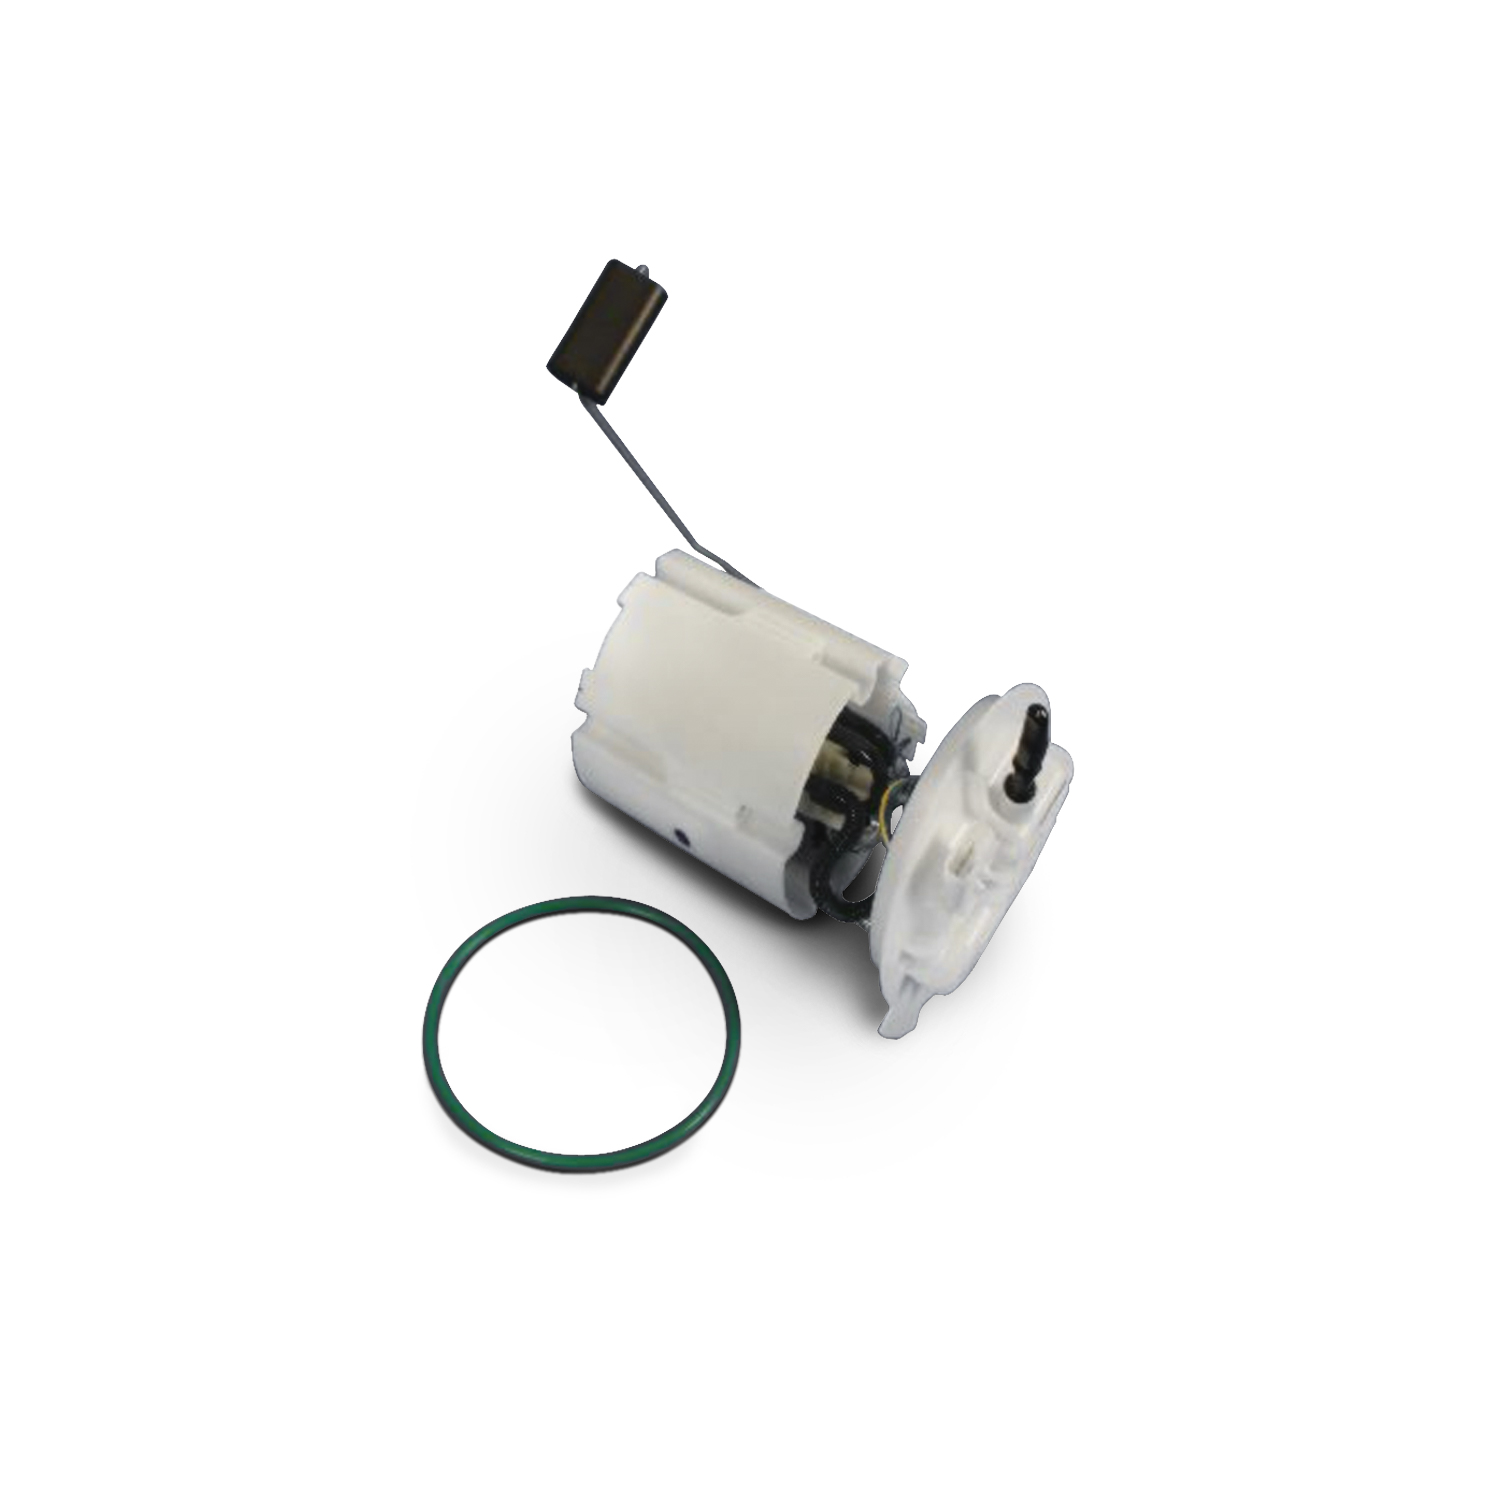 MOPAR BRAND - Fuel Pump Complete Kit - MPB 05145614AB